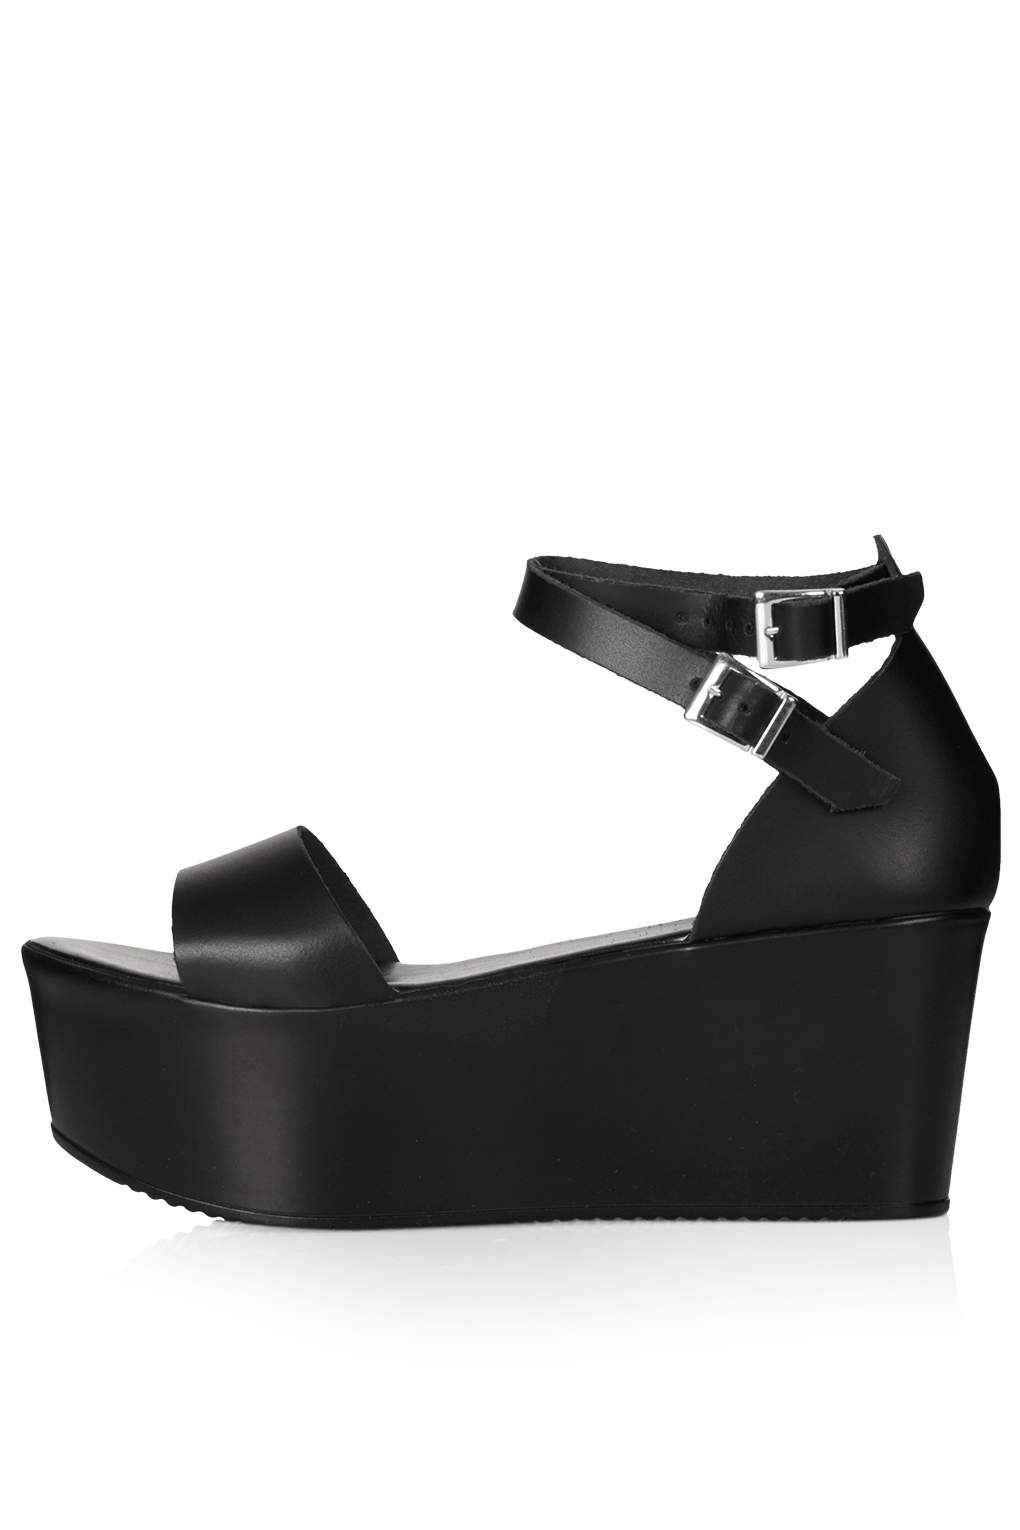 Lyst - Topshop Wallis Flatform Sandals in Black